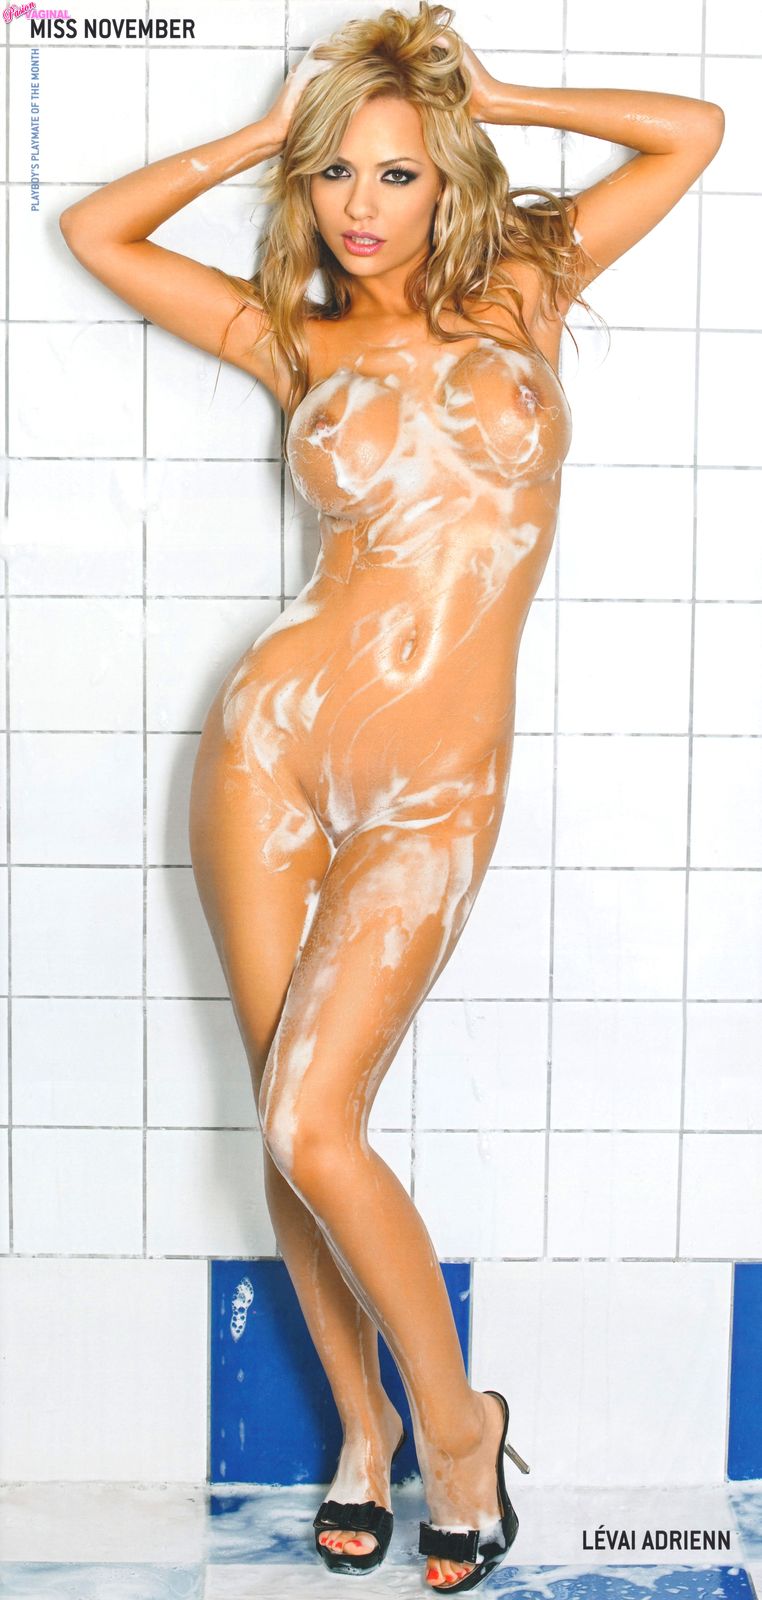 Levai-Adrienn-Playboy-2010-11.jpg